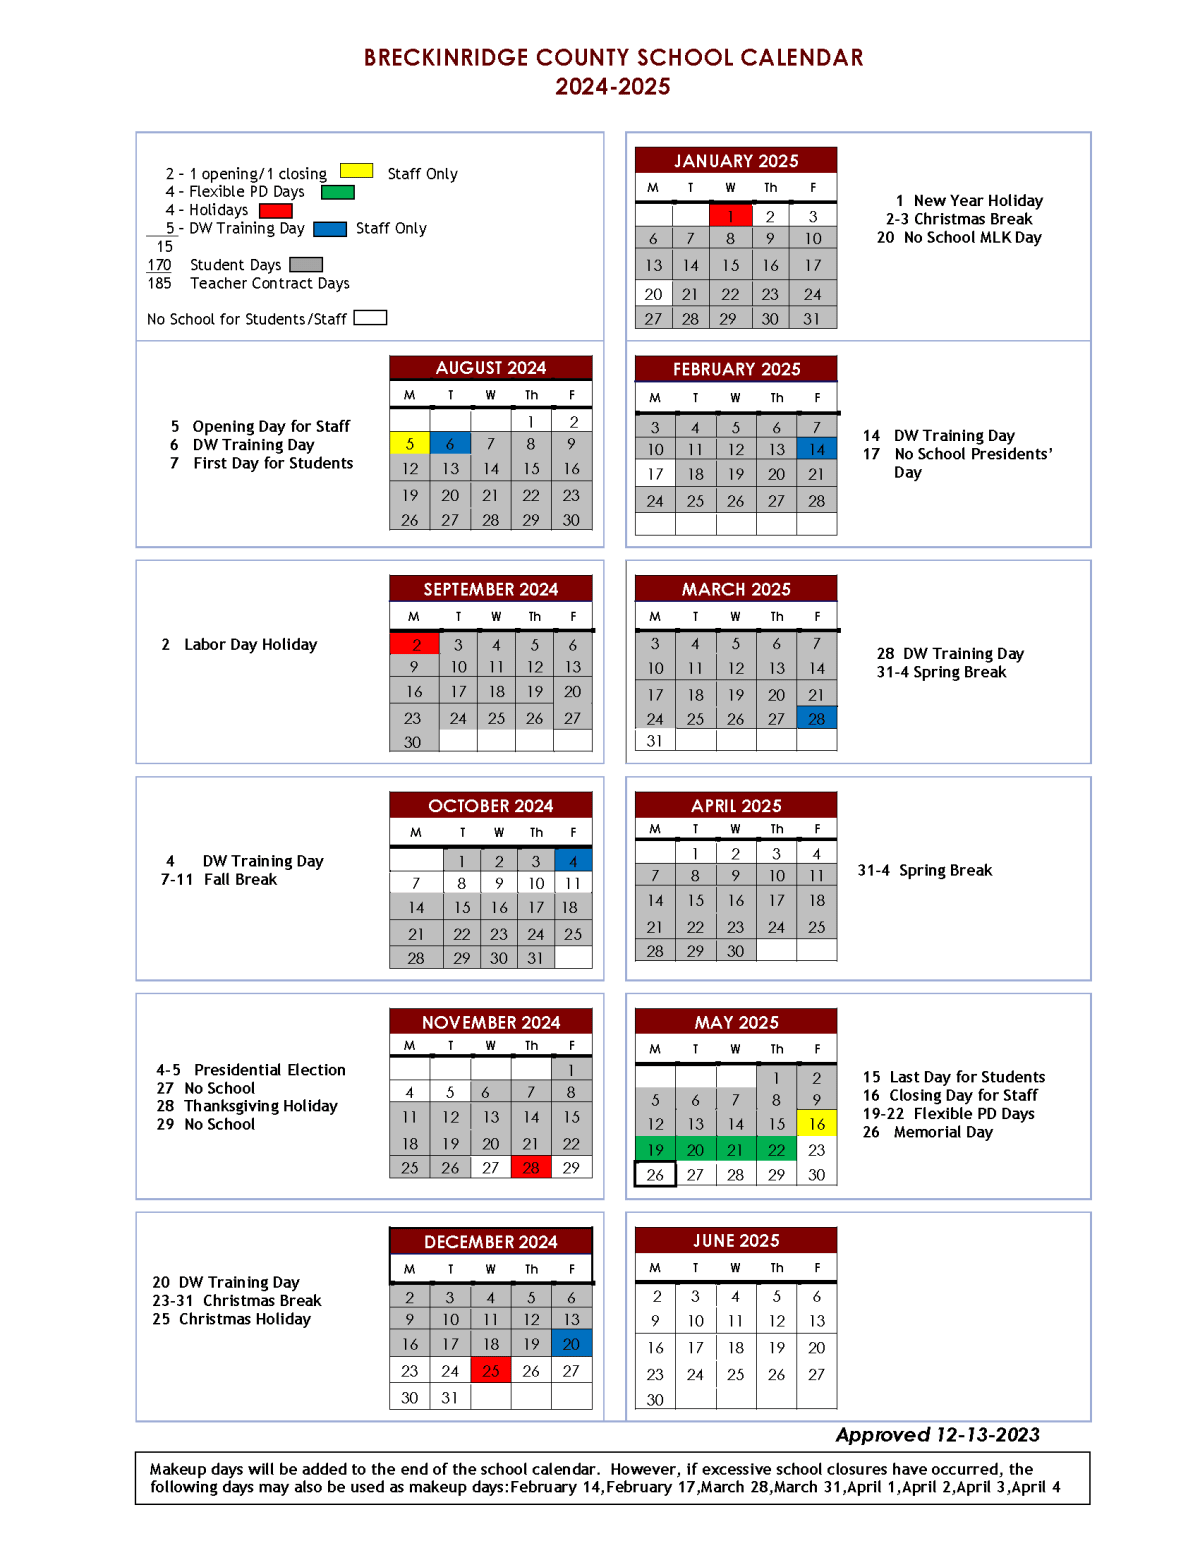 Breckinridge County Schools Calendar 2024 and 2025 - PublicHolidays.com